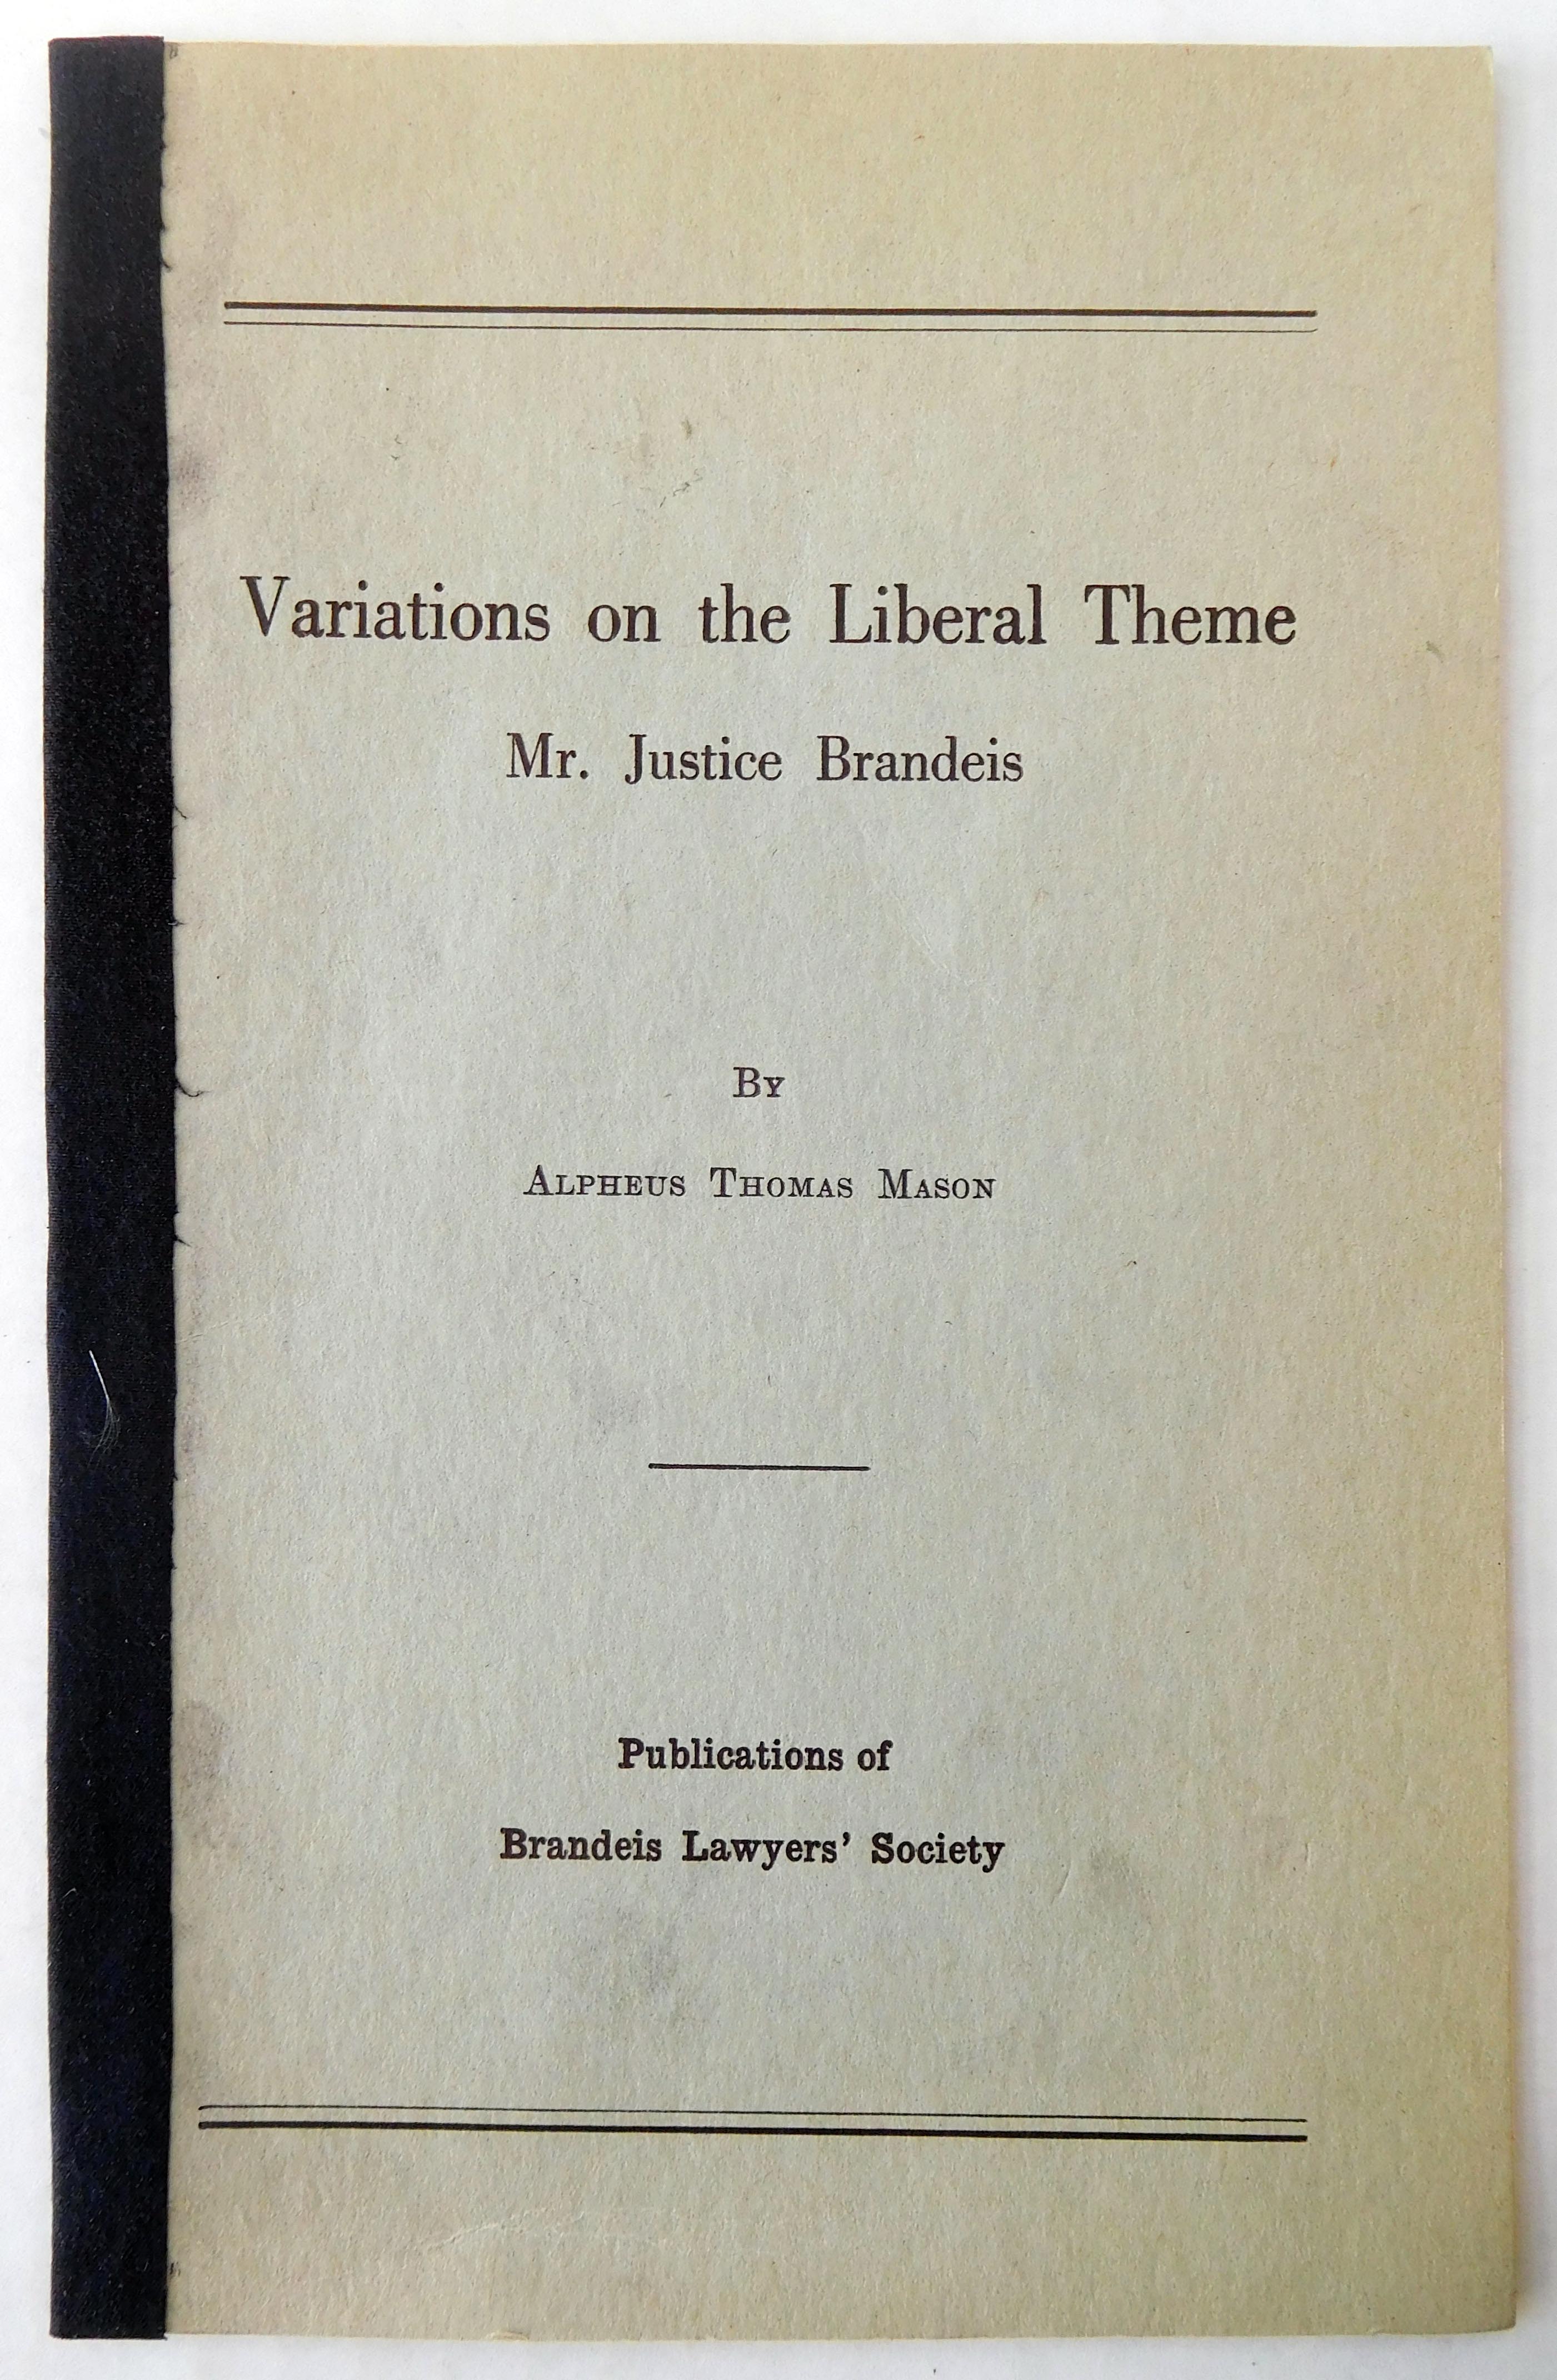 Mason, Alpheus Thomas - Variations on the Liberal Theme, Mr. Justice Brandeis